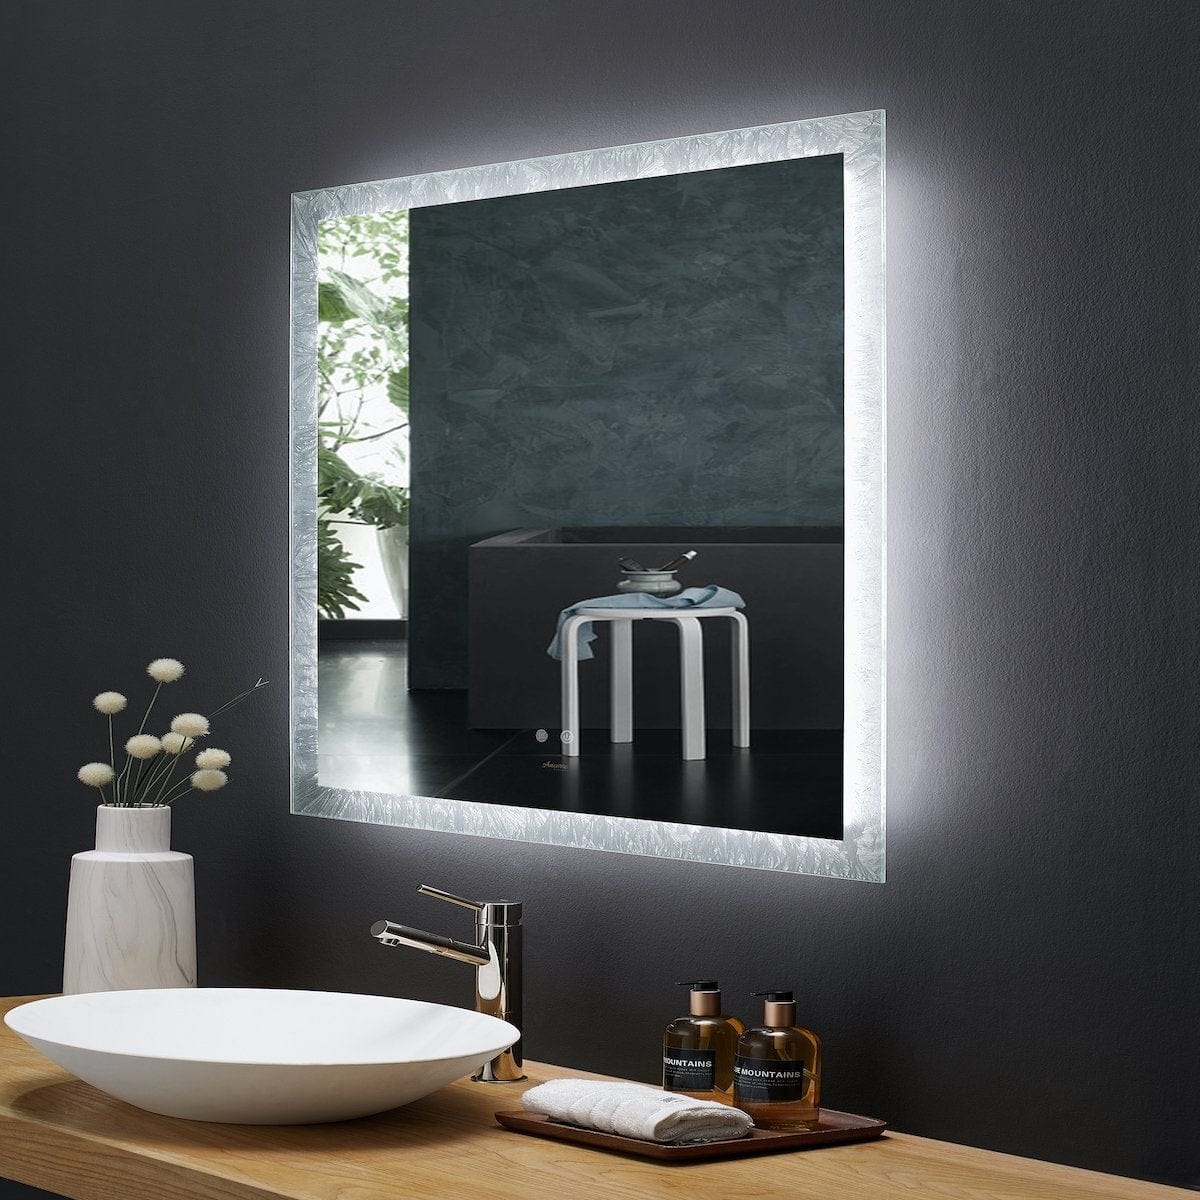 Ancerre Designs 36" LED Frysta Mirror LEDM-FRYSTA-36